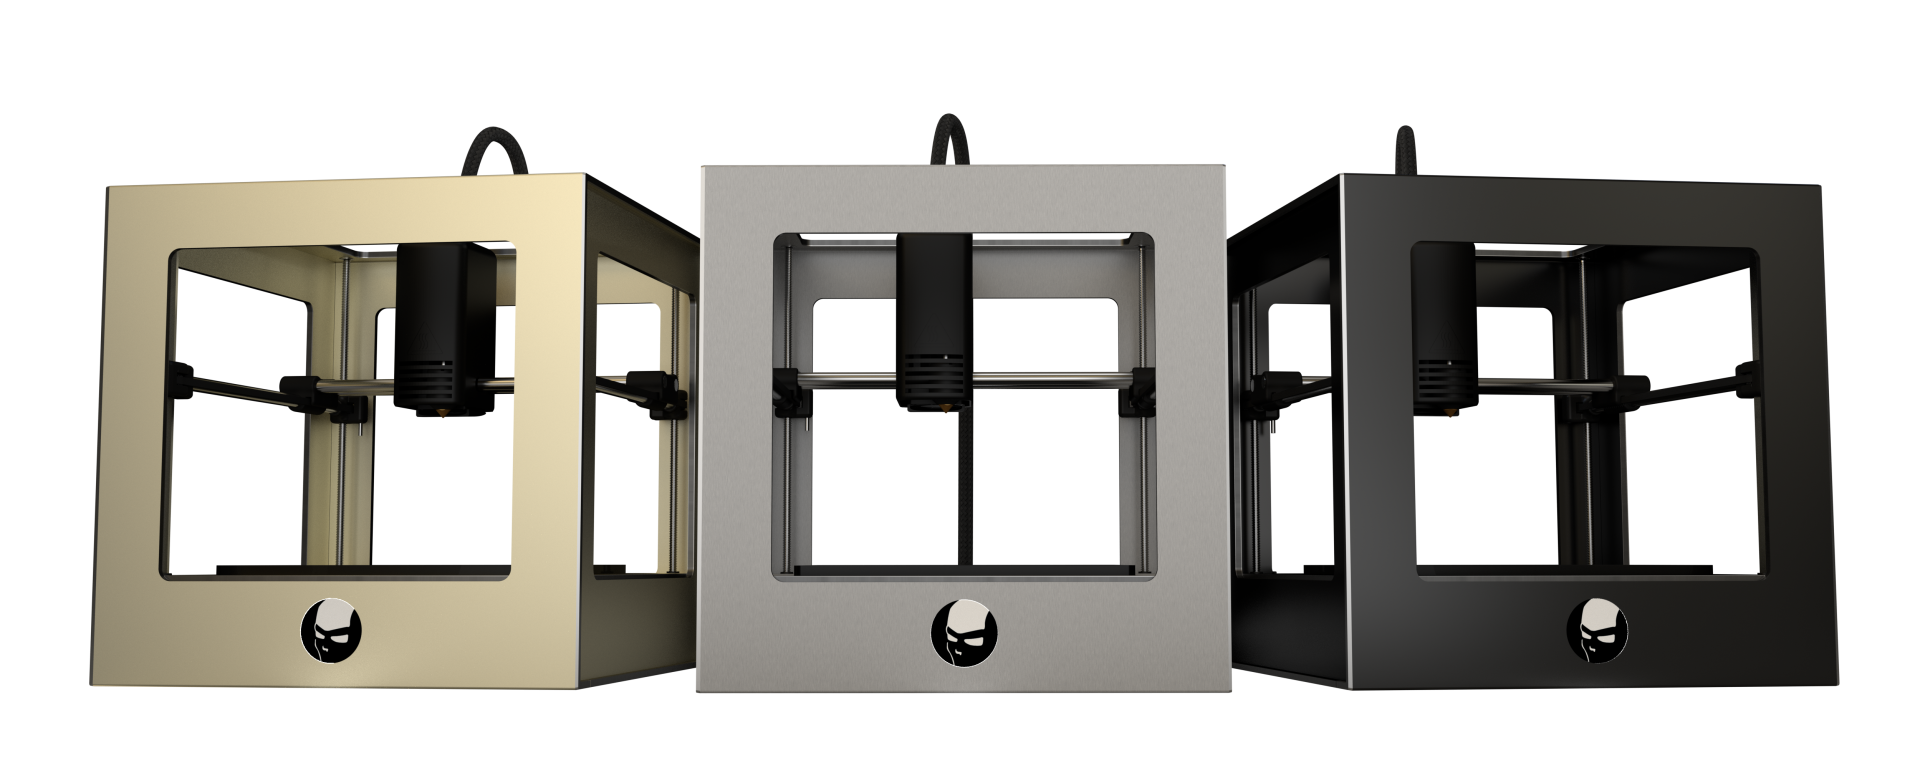 3D принтер CyberMICRO